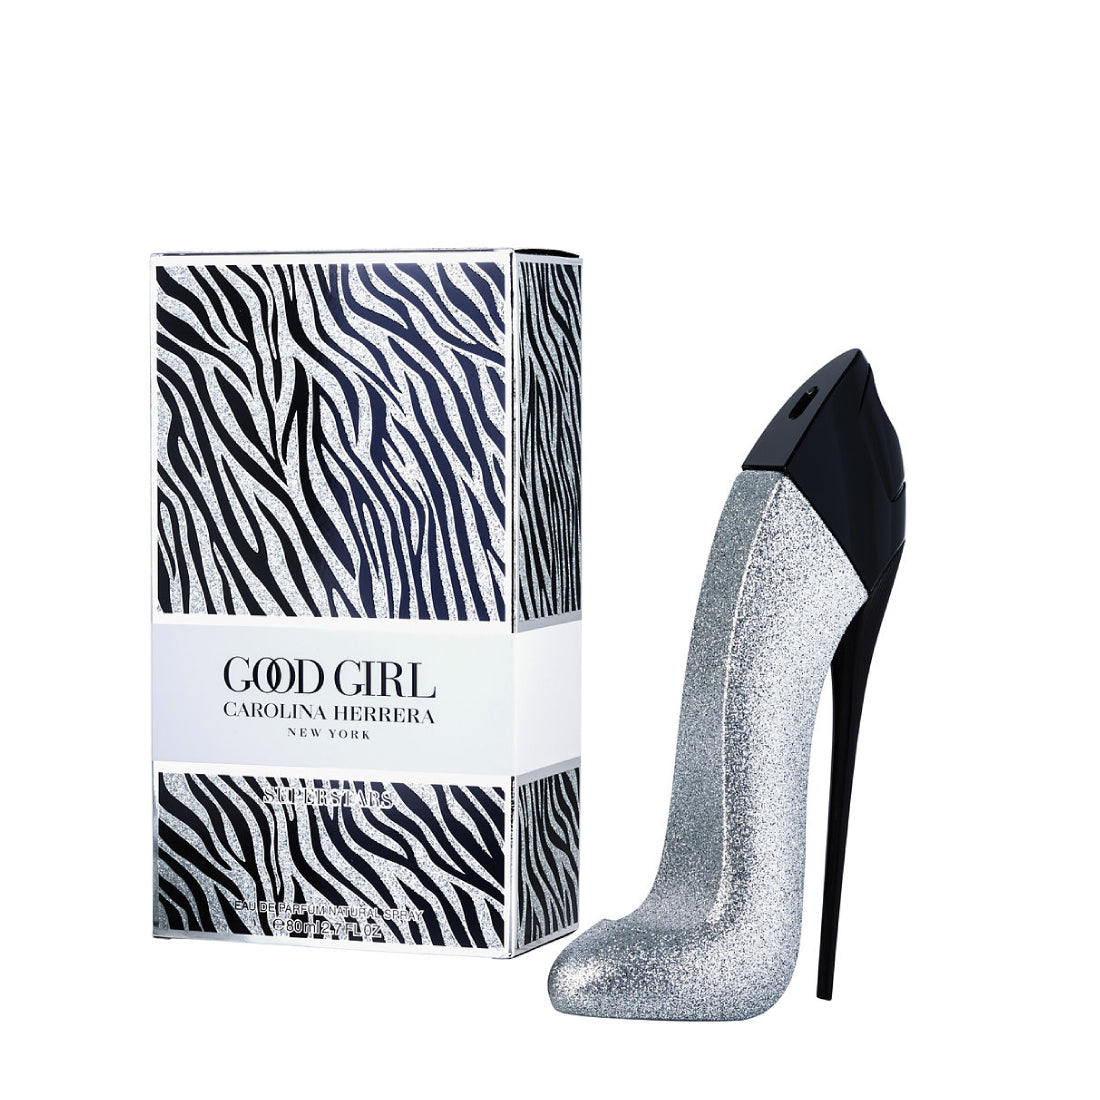 Carolina Herrera Good Girl Dazzling Garden Limited-Edition Eau de